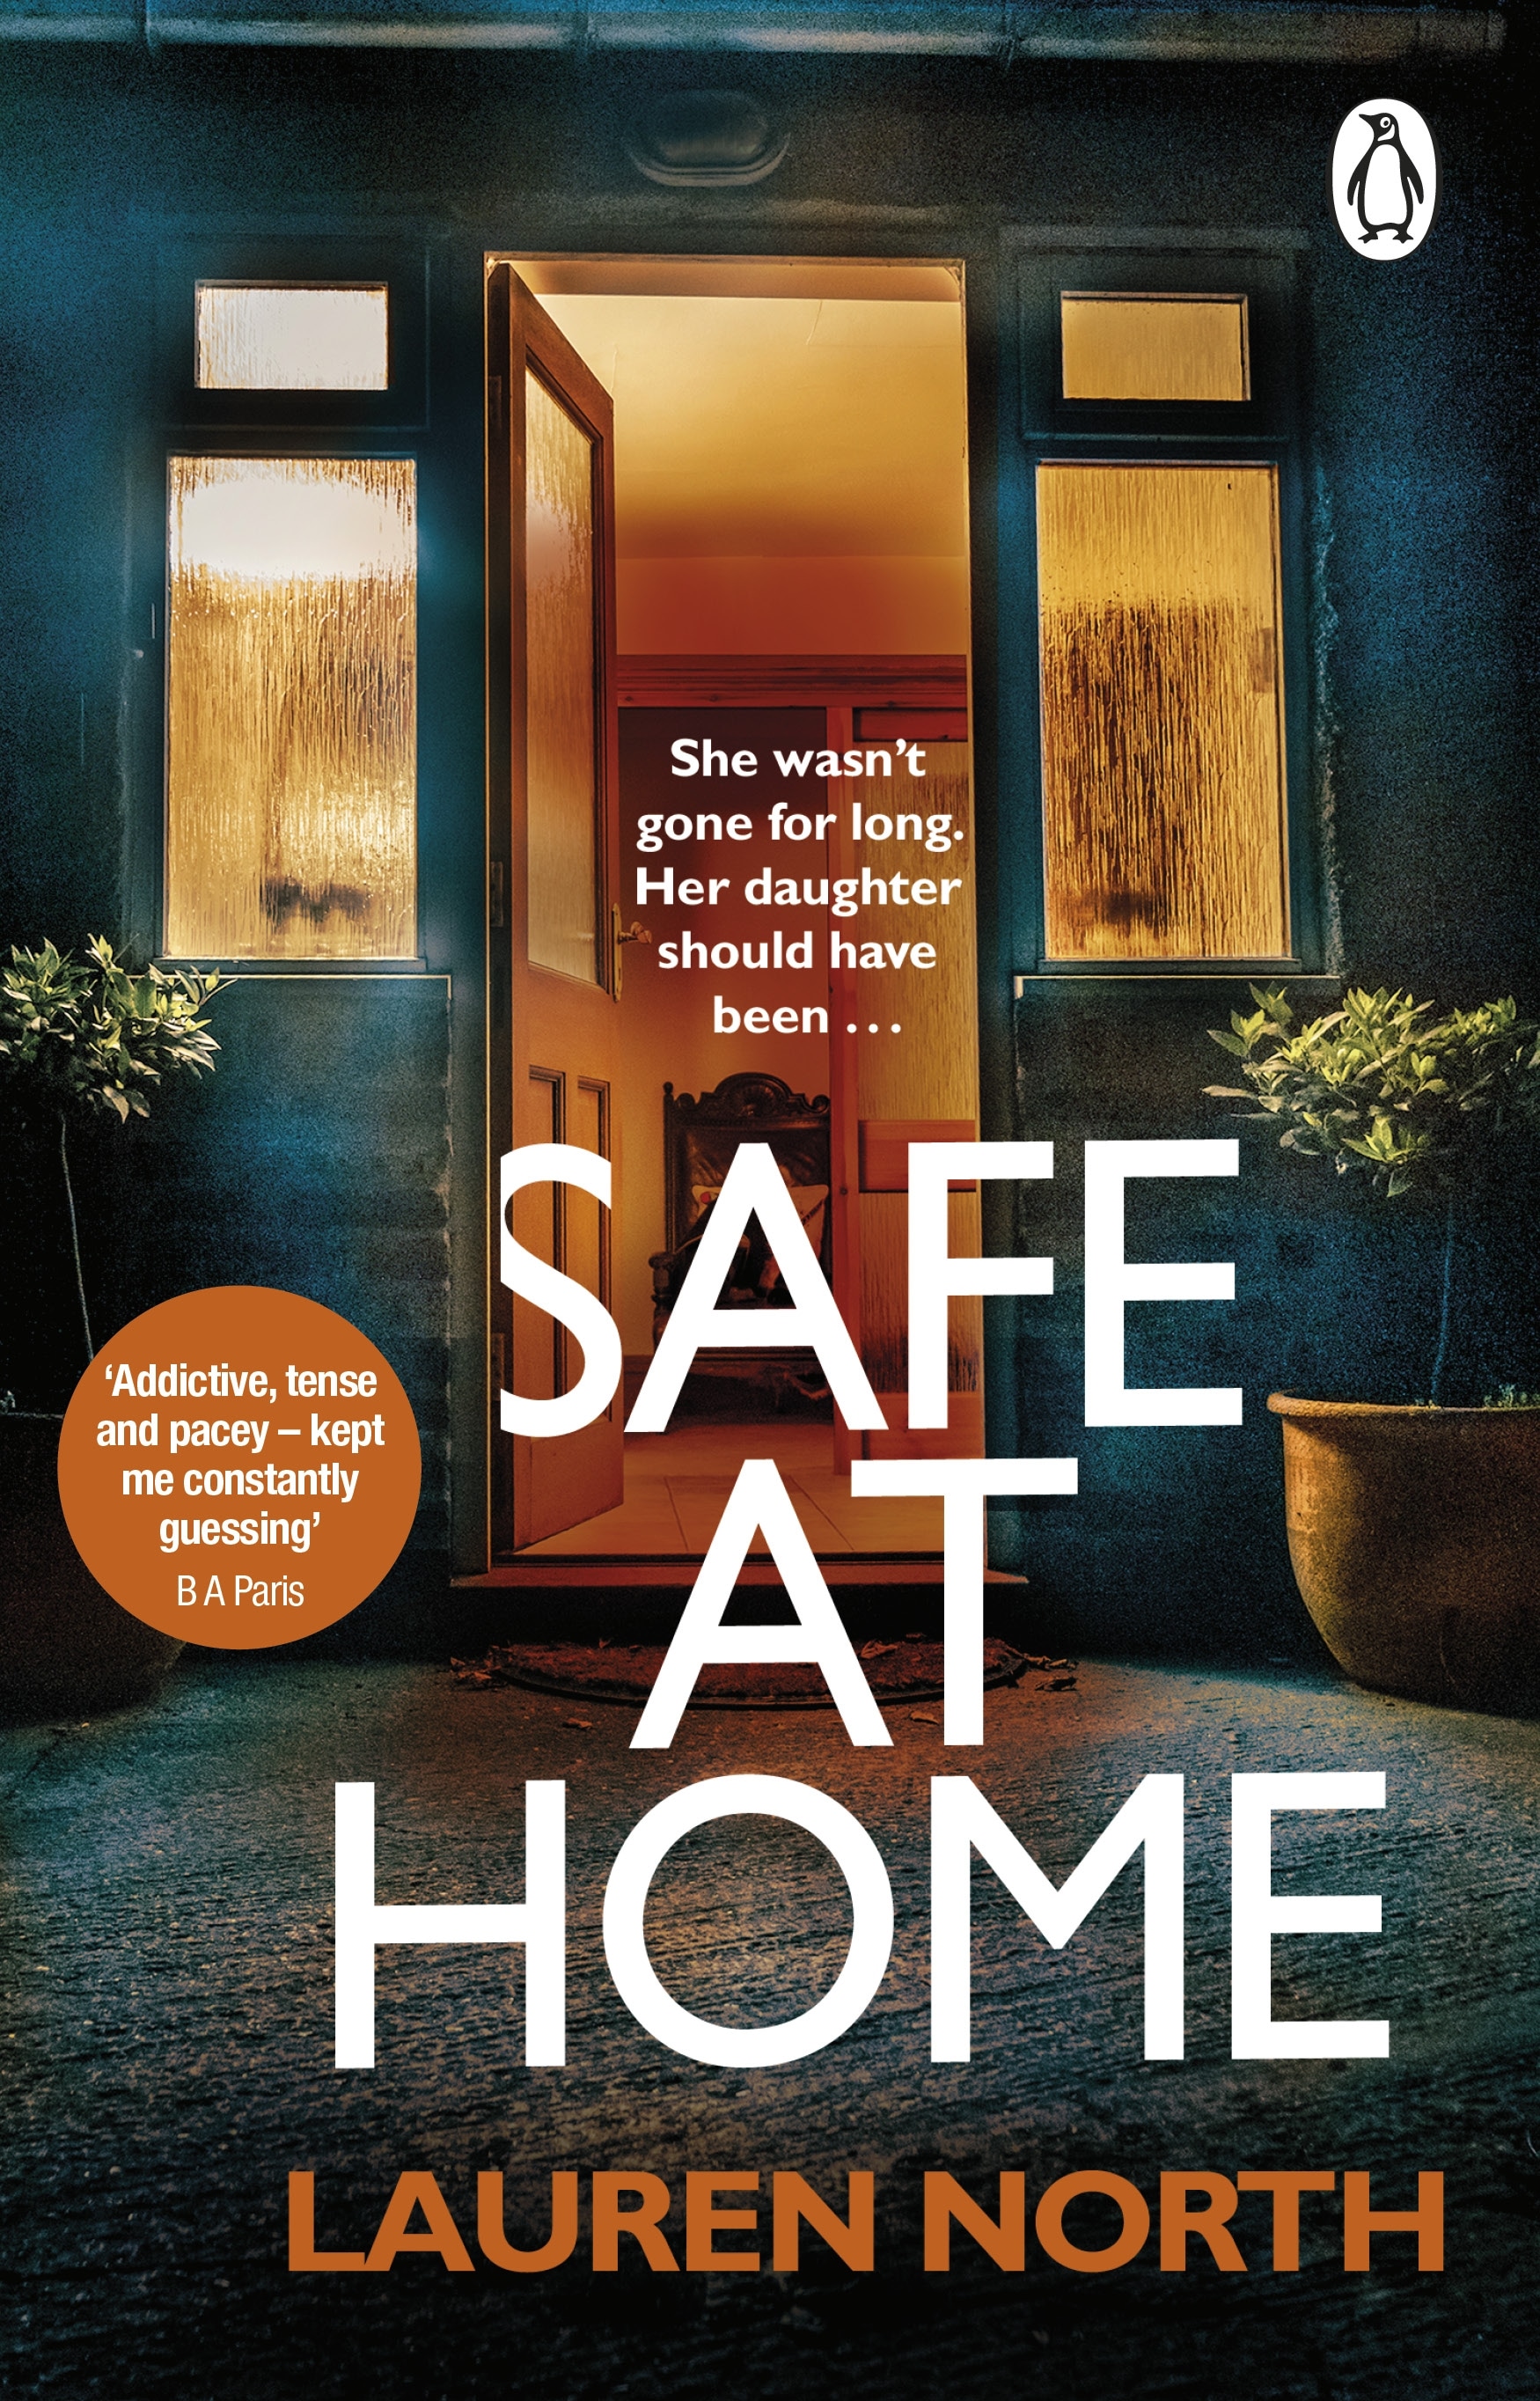 Book “Safe at Home” by Lauren North — September 30, 2021